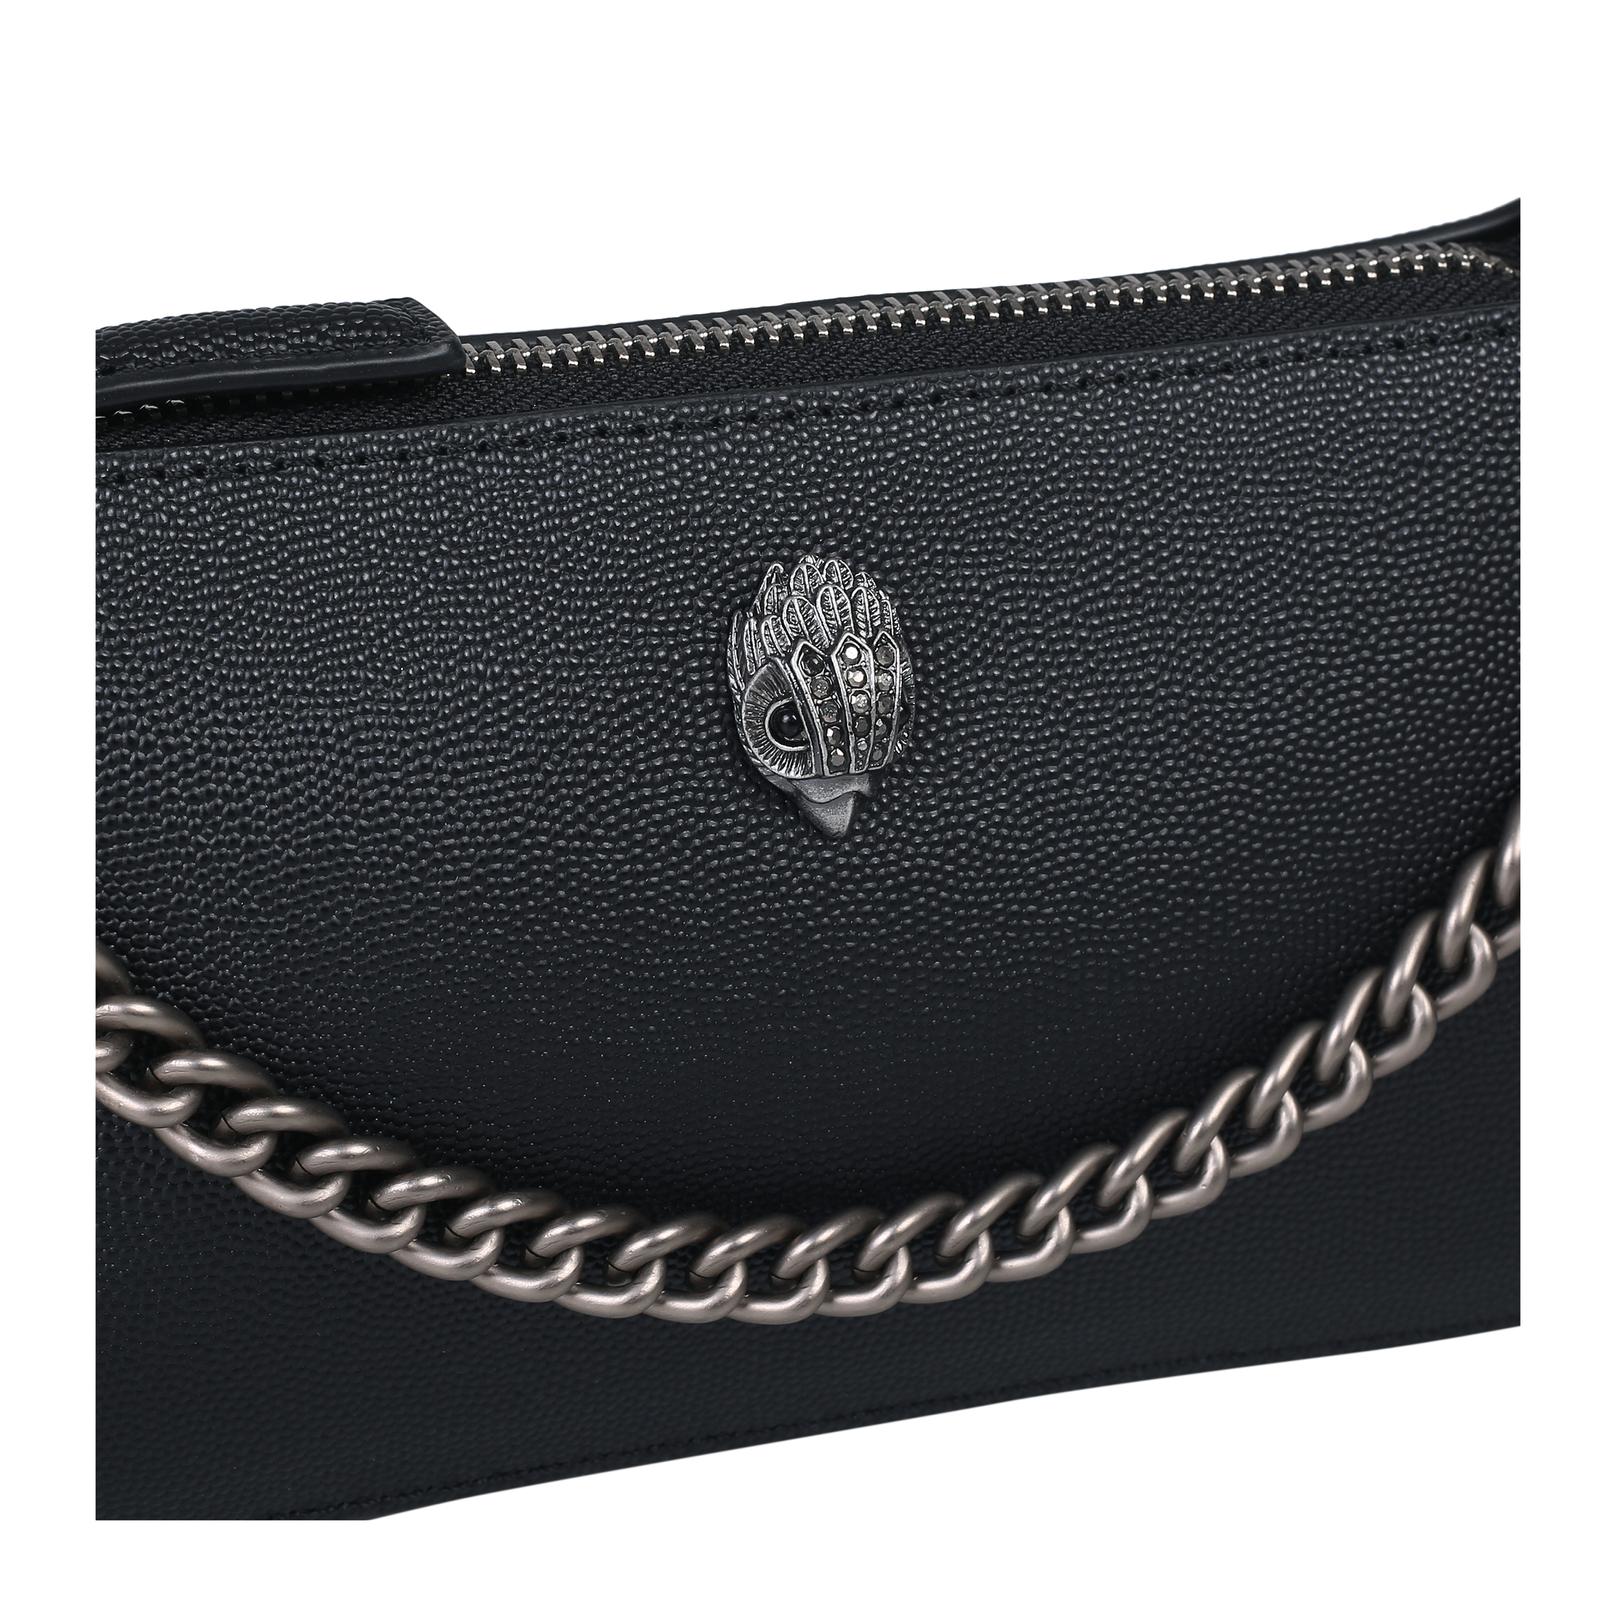 SHOREDITCH POCHETTE Black Textured Leather Pochette Bag by KURT GEIGER ...